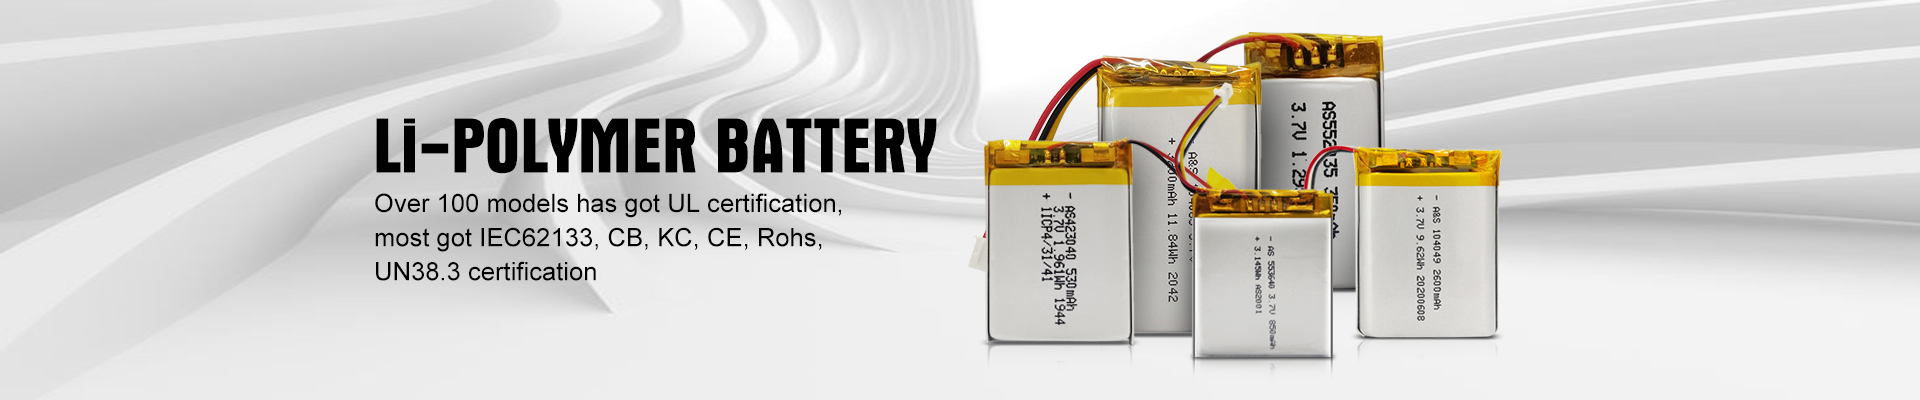 AS Power Lipo Battery